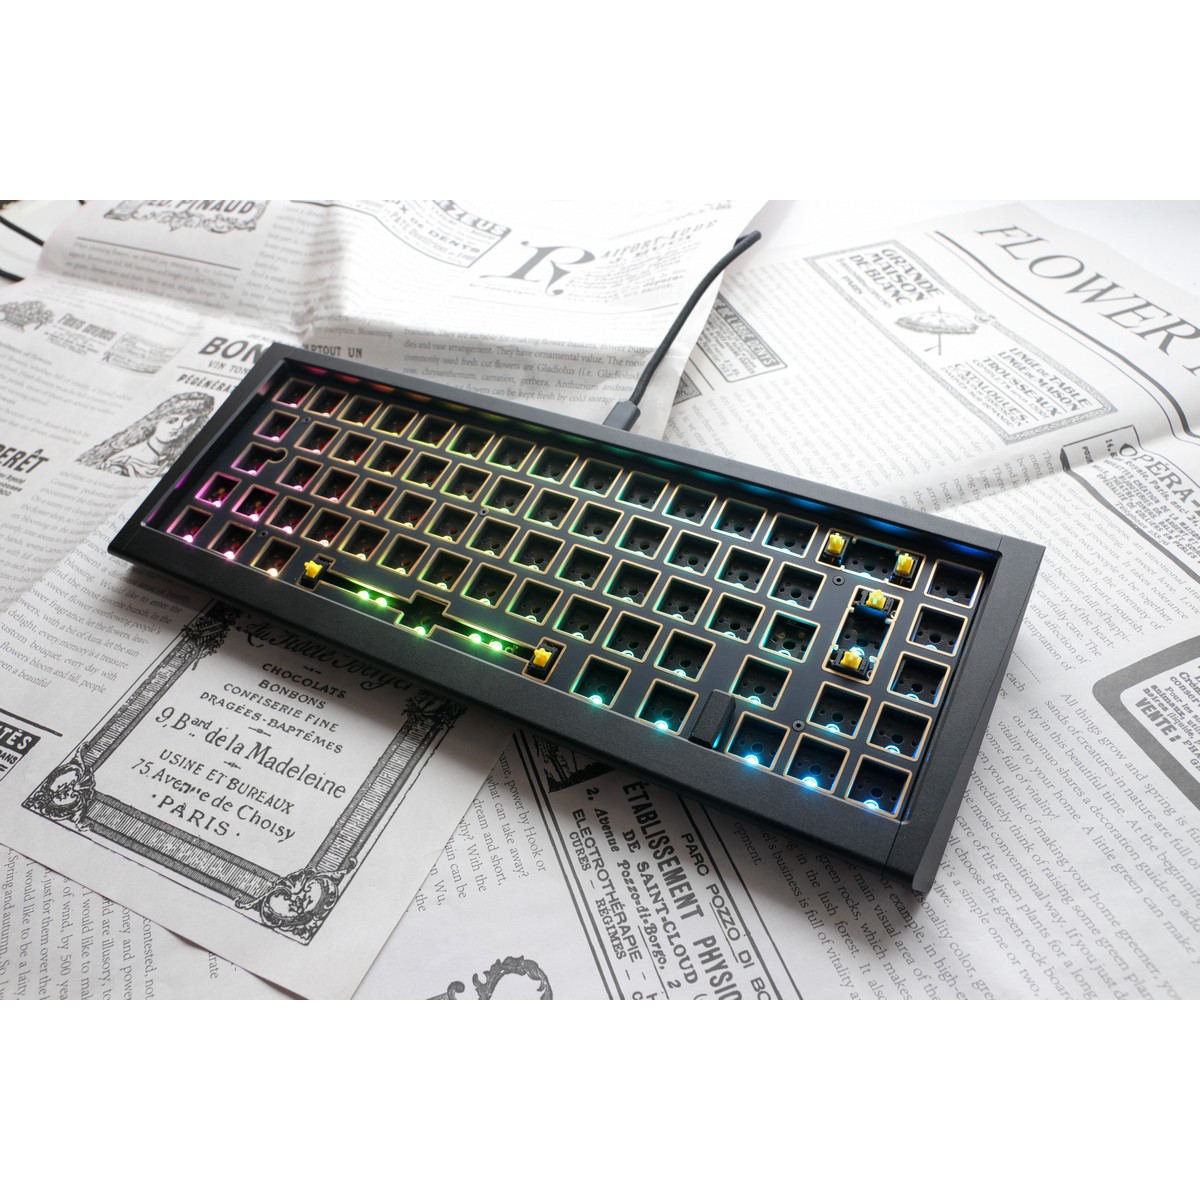 Ducky - Ducky ProjectD Outlaw65 Barebone Custom Keyboard - Black (First Edition)